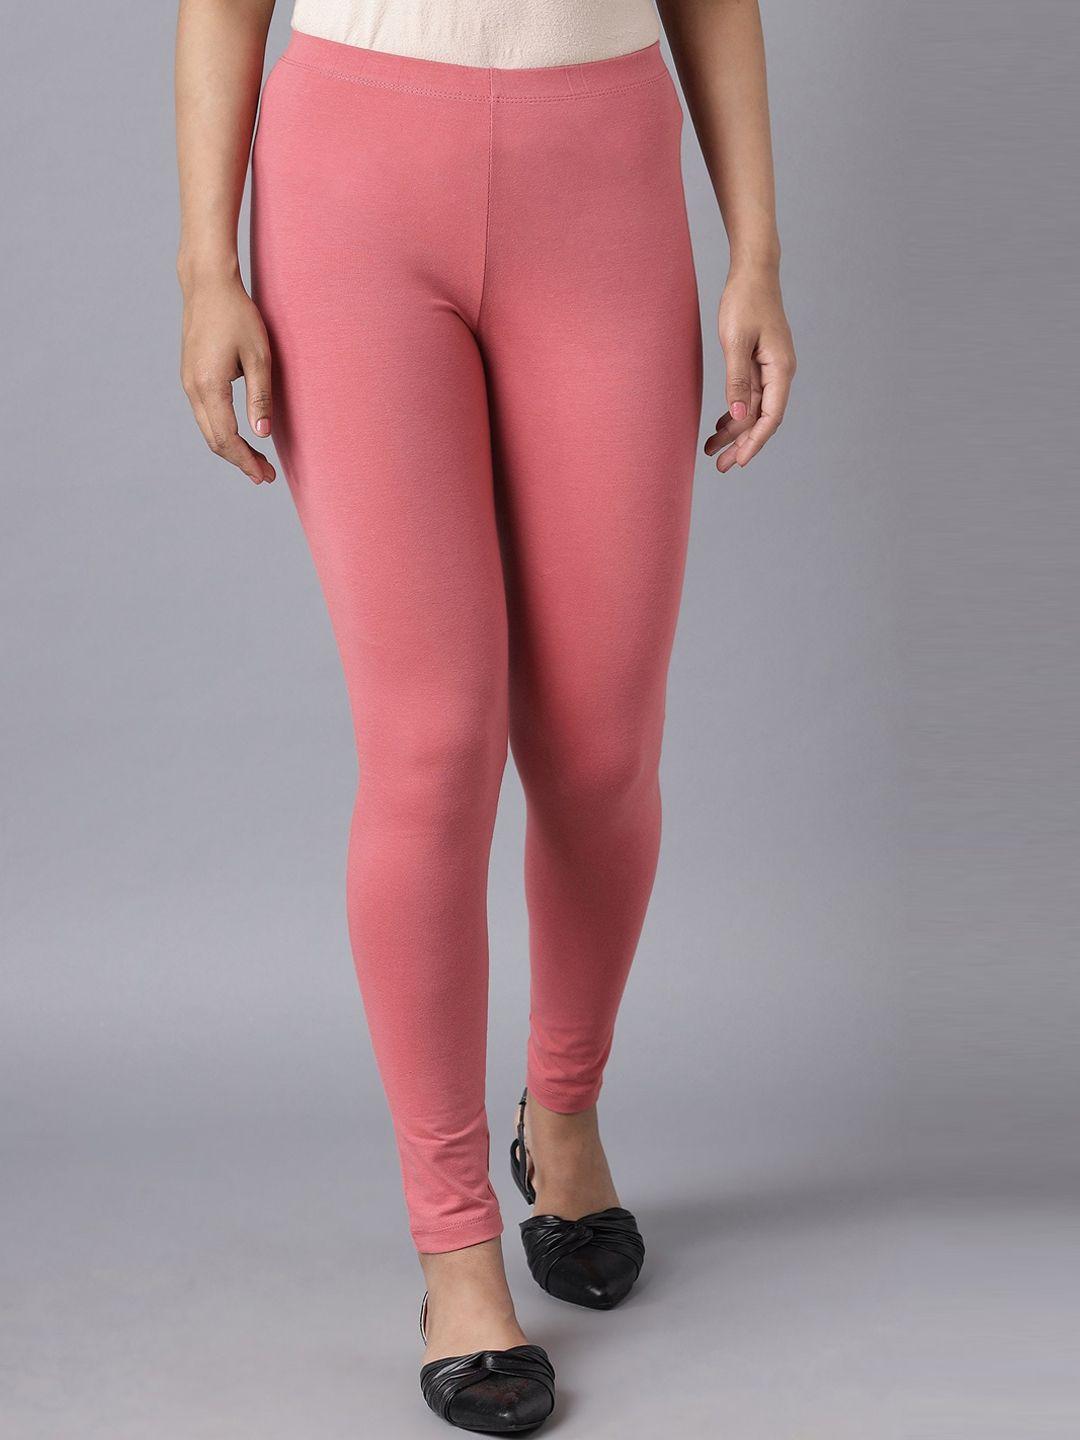 elleven women pink solid slim-fit churidar-length leggings